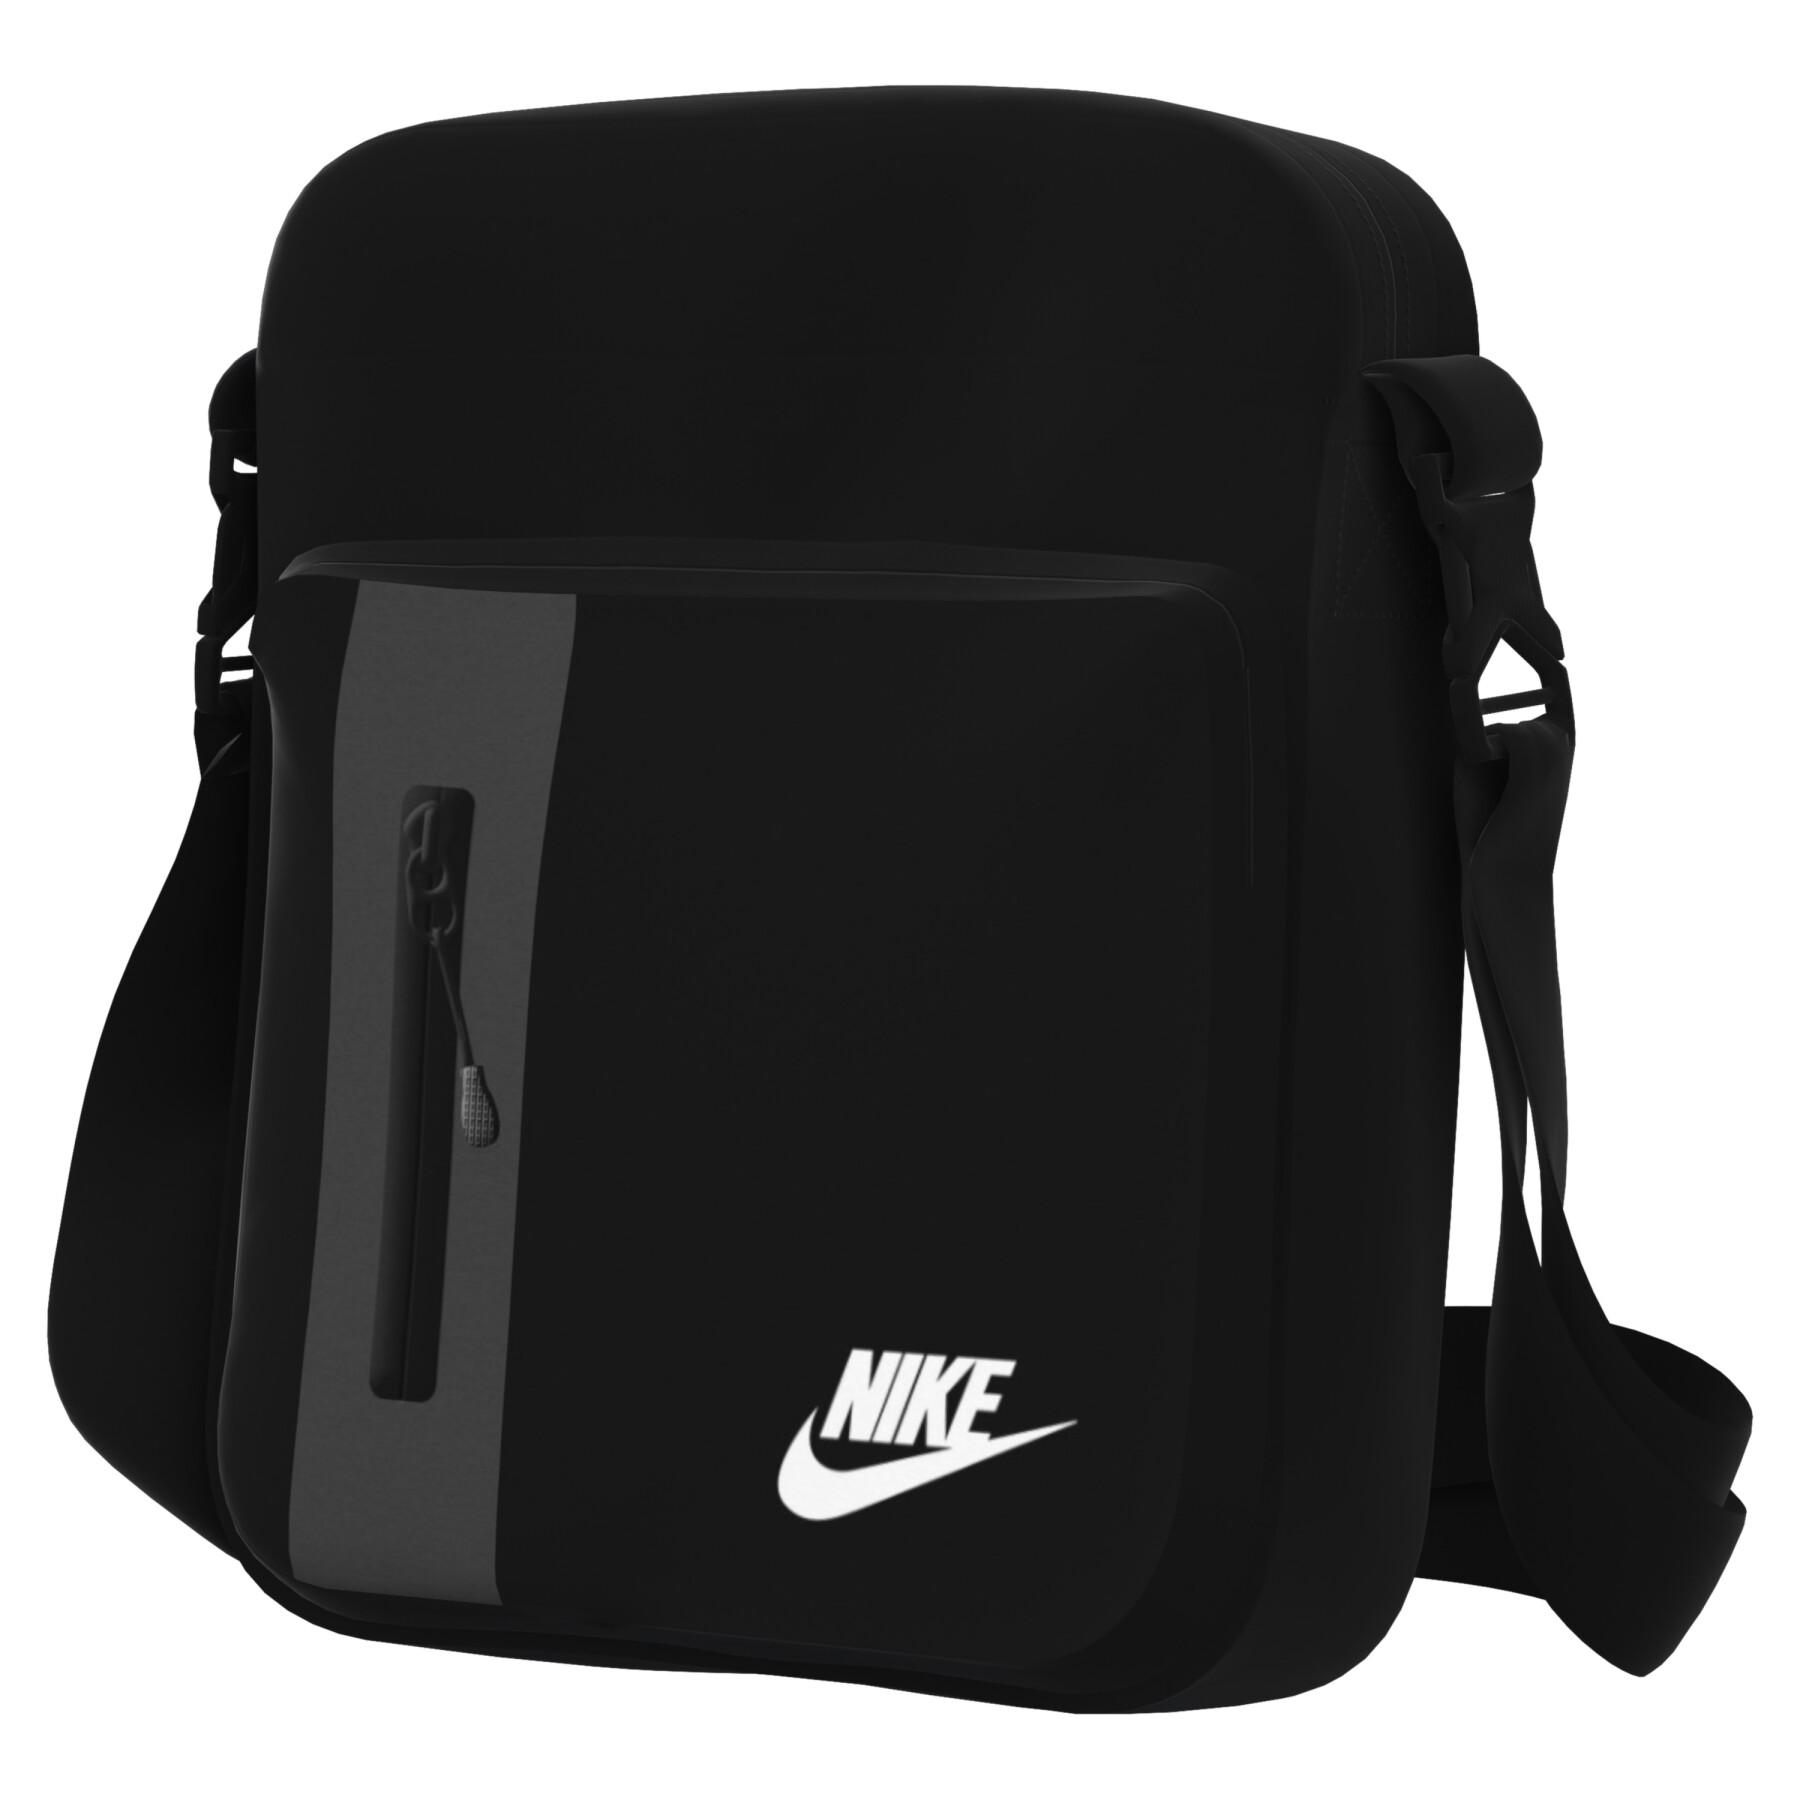 Tasche Nike Elemental Premium